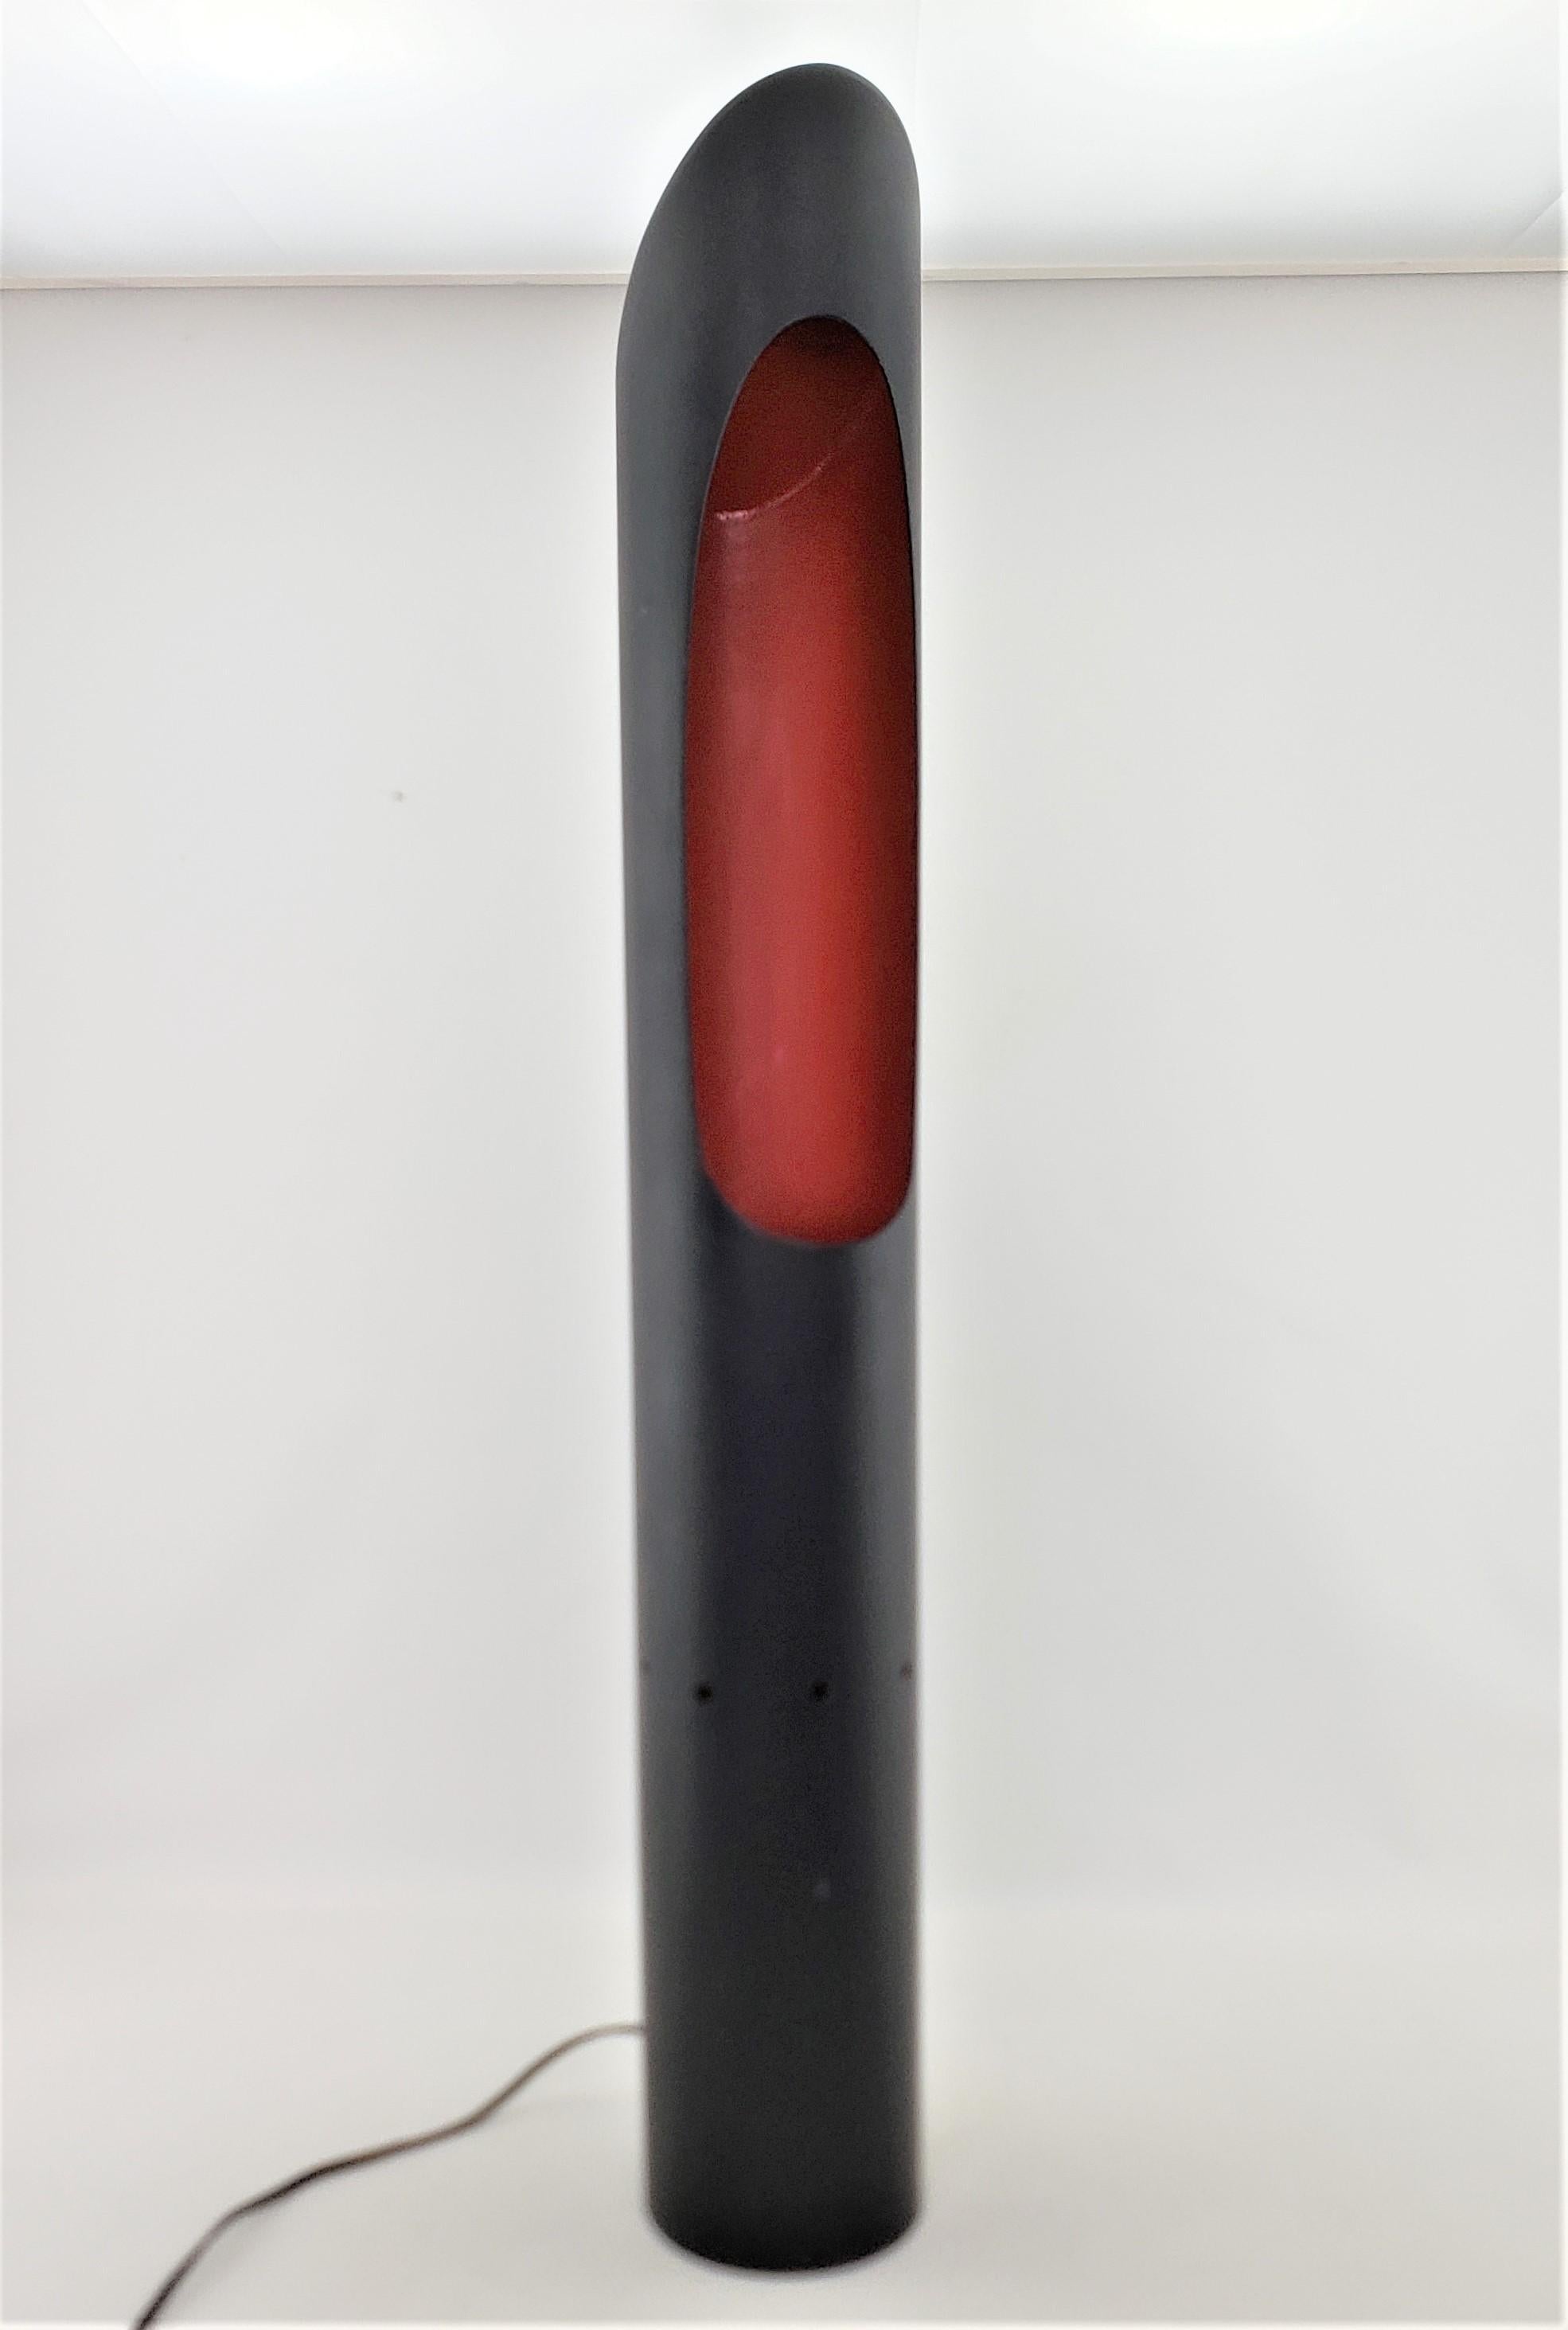 Unique Mid-Century Modern Pop Art Metal Tubular Pillar Floor or Accent Lamp For Sale 1